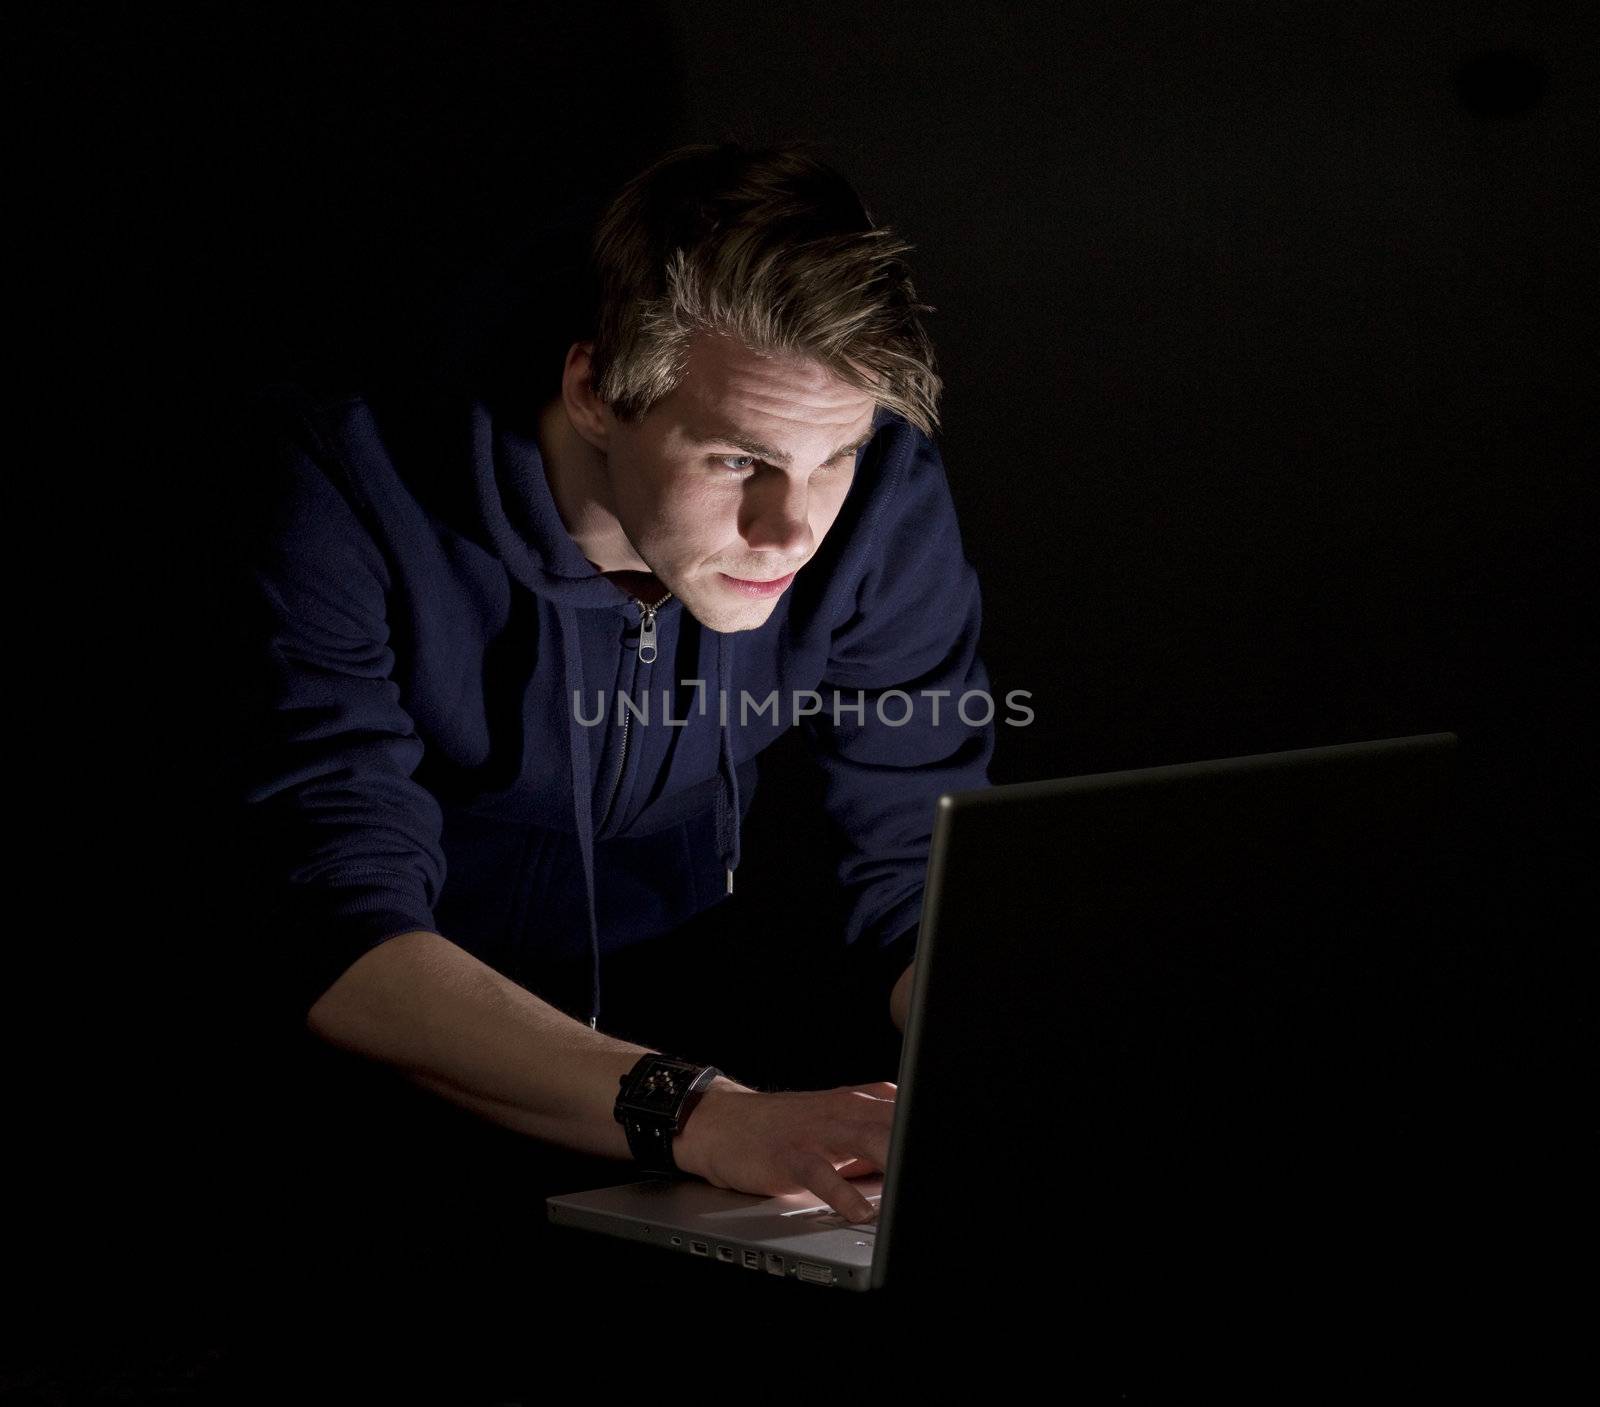 man infront of a computer